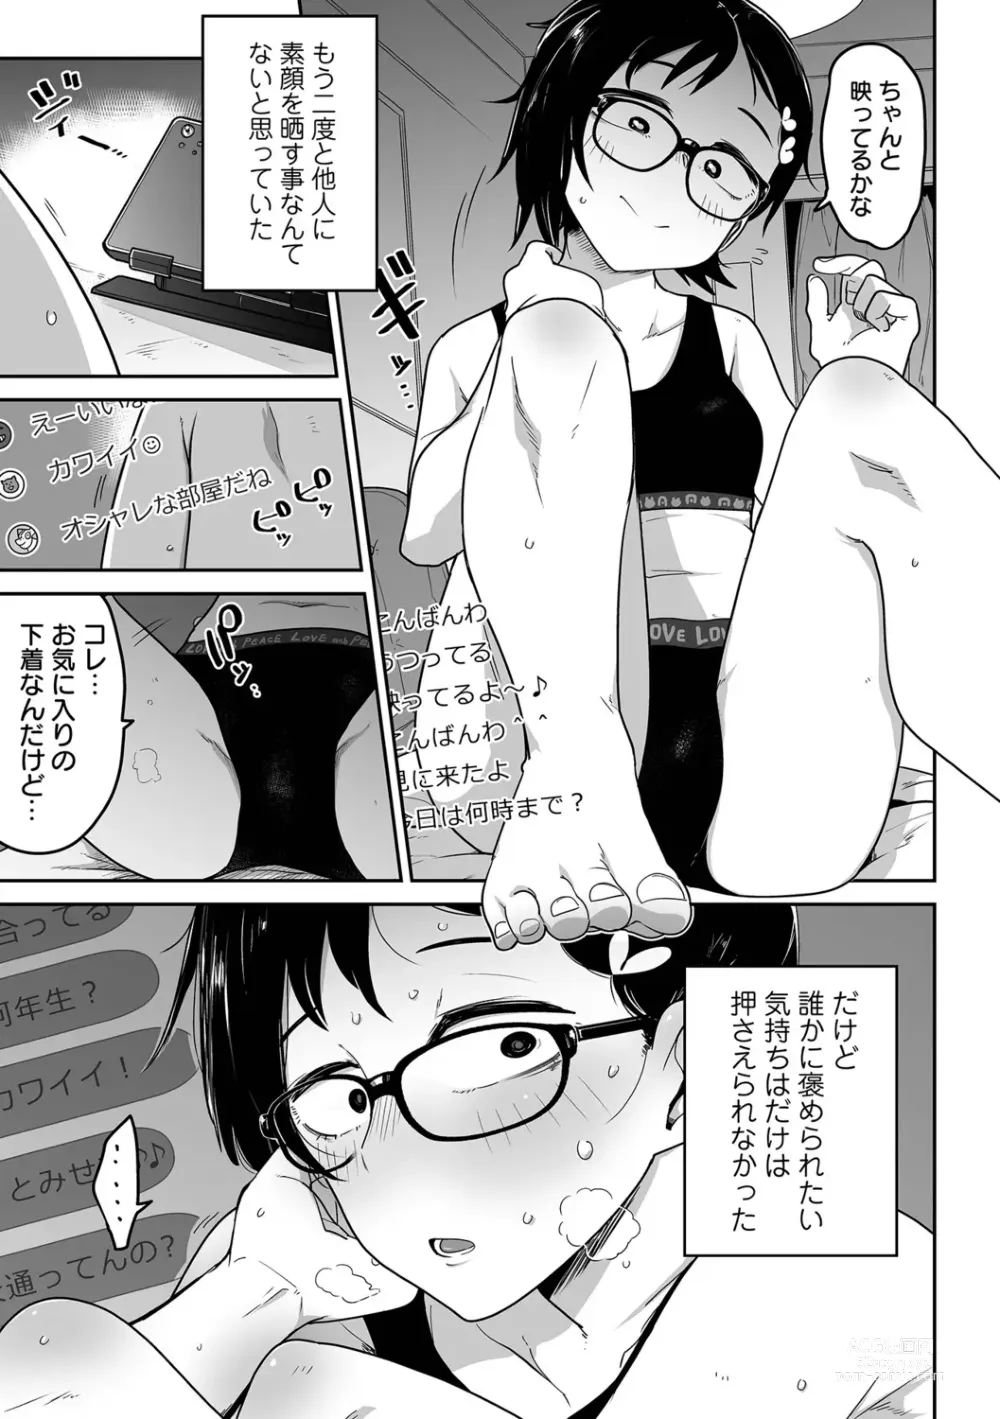 Page 29 of manga Ryona King Vol.19